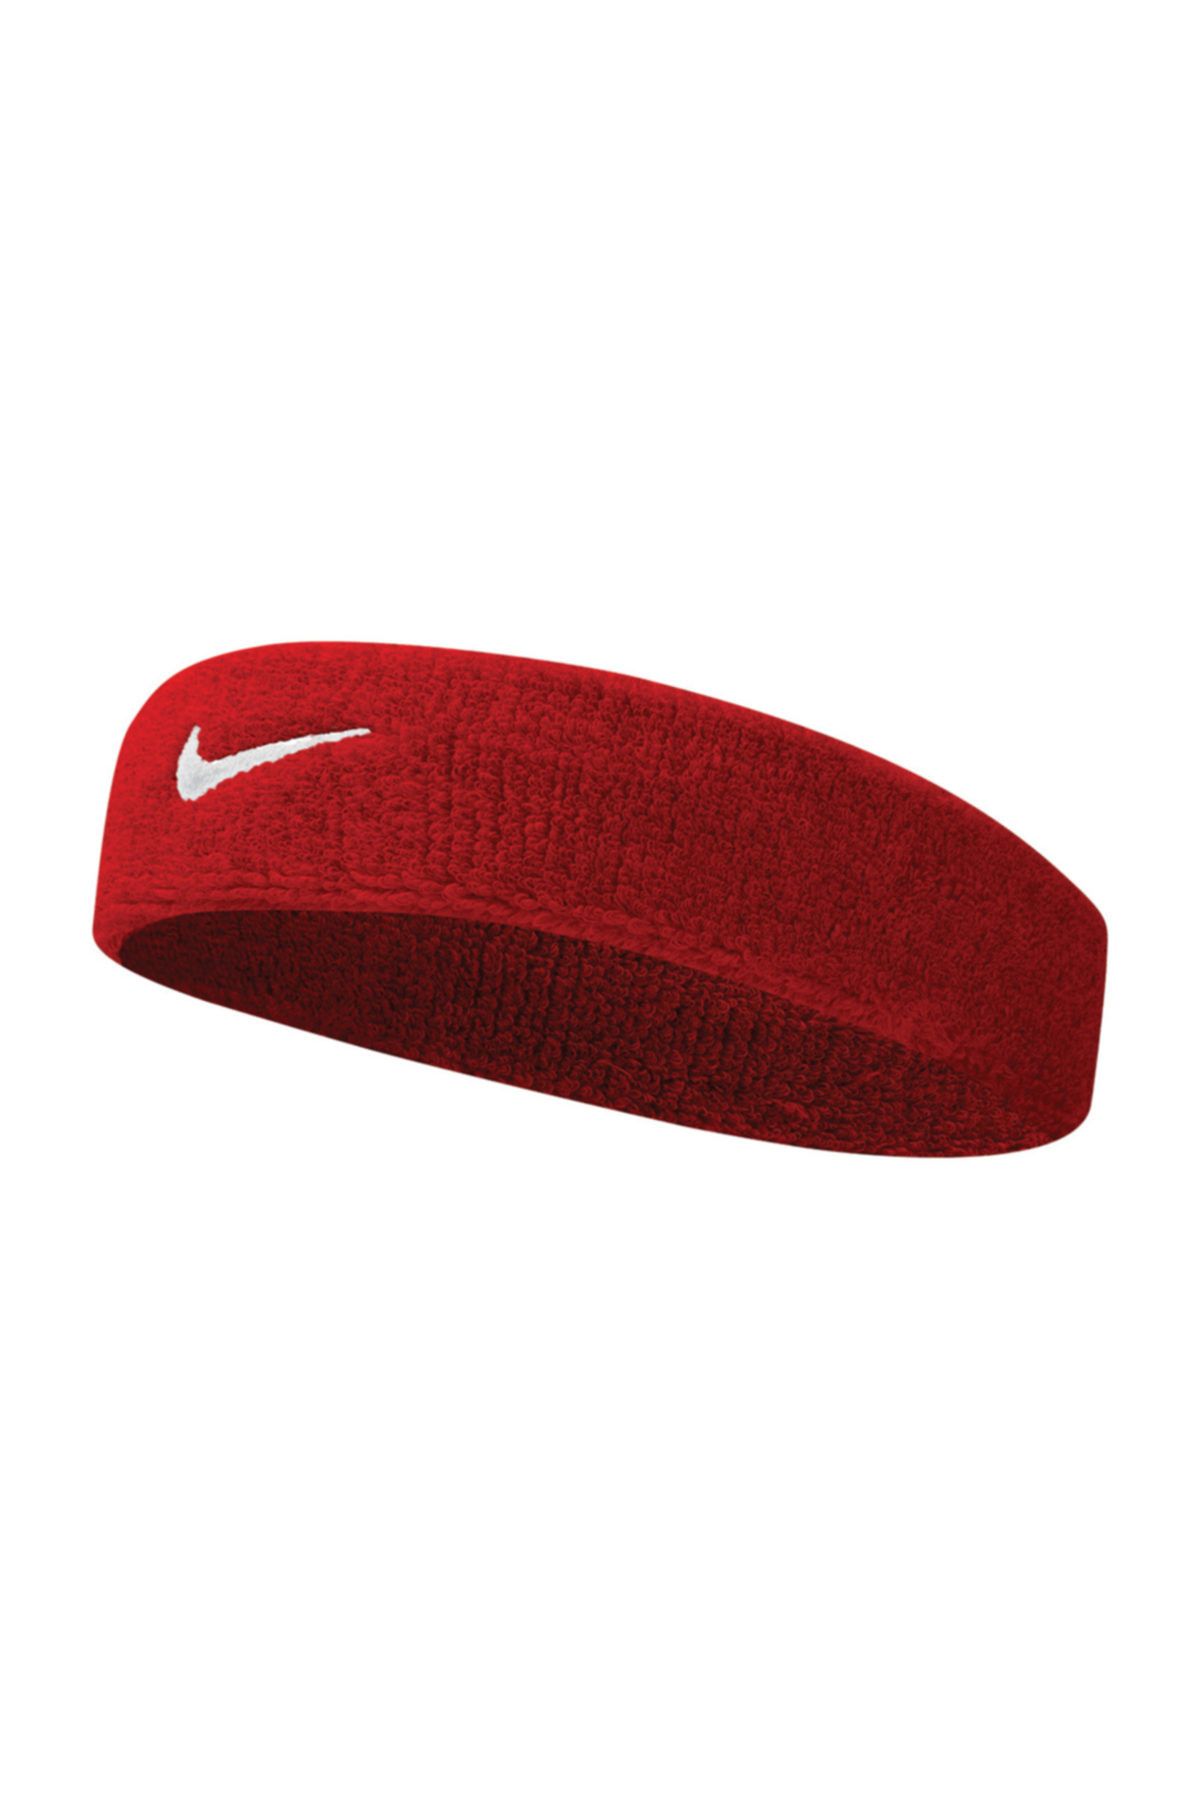 Nike Saç Bandı - Swoosh Alın Ter Bandı - N.NN.07.659.OS